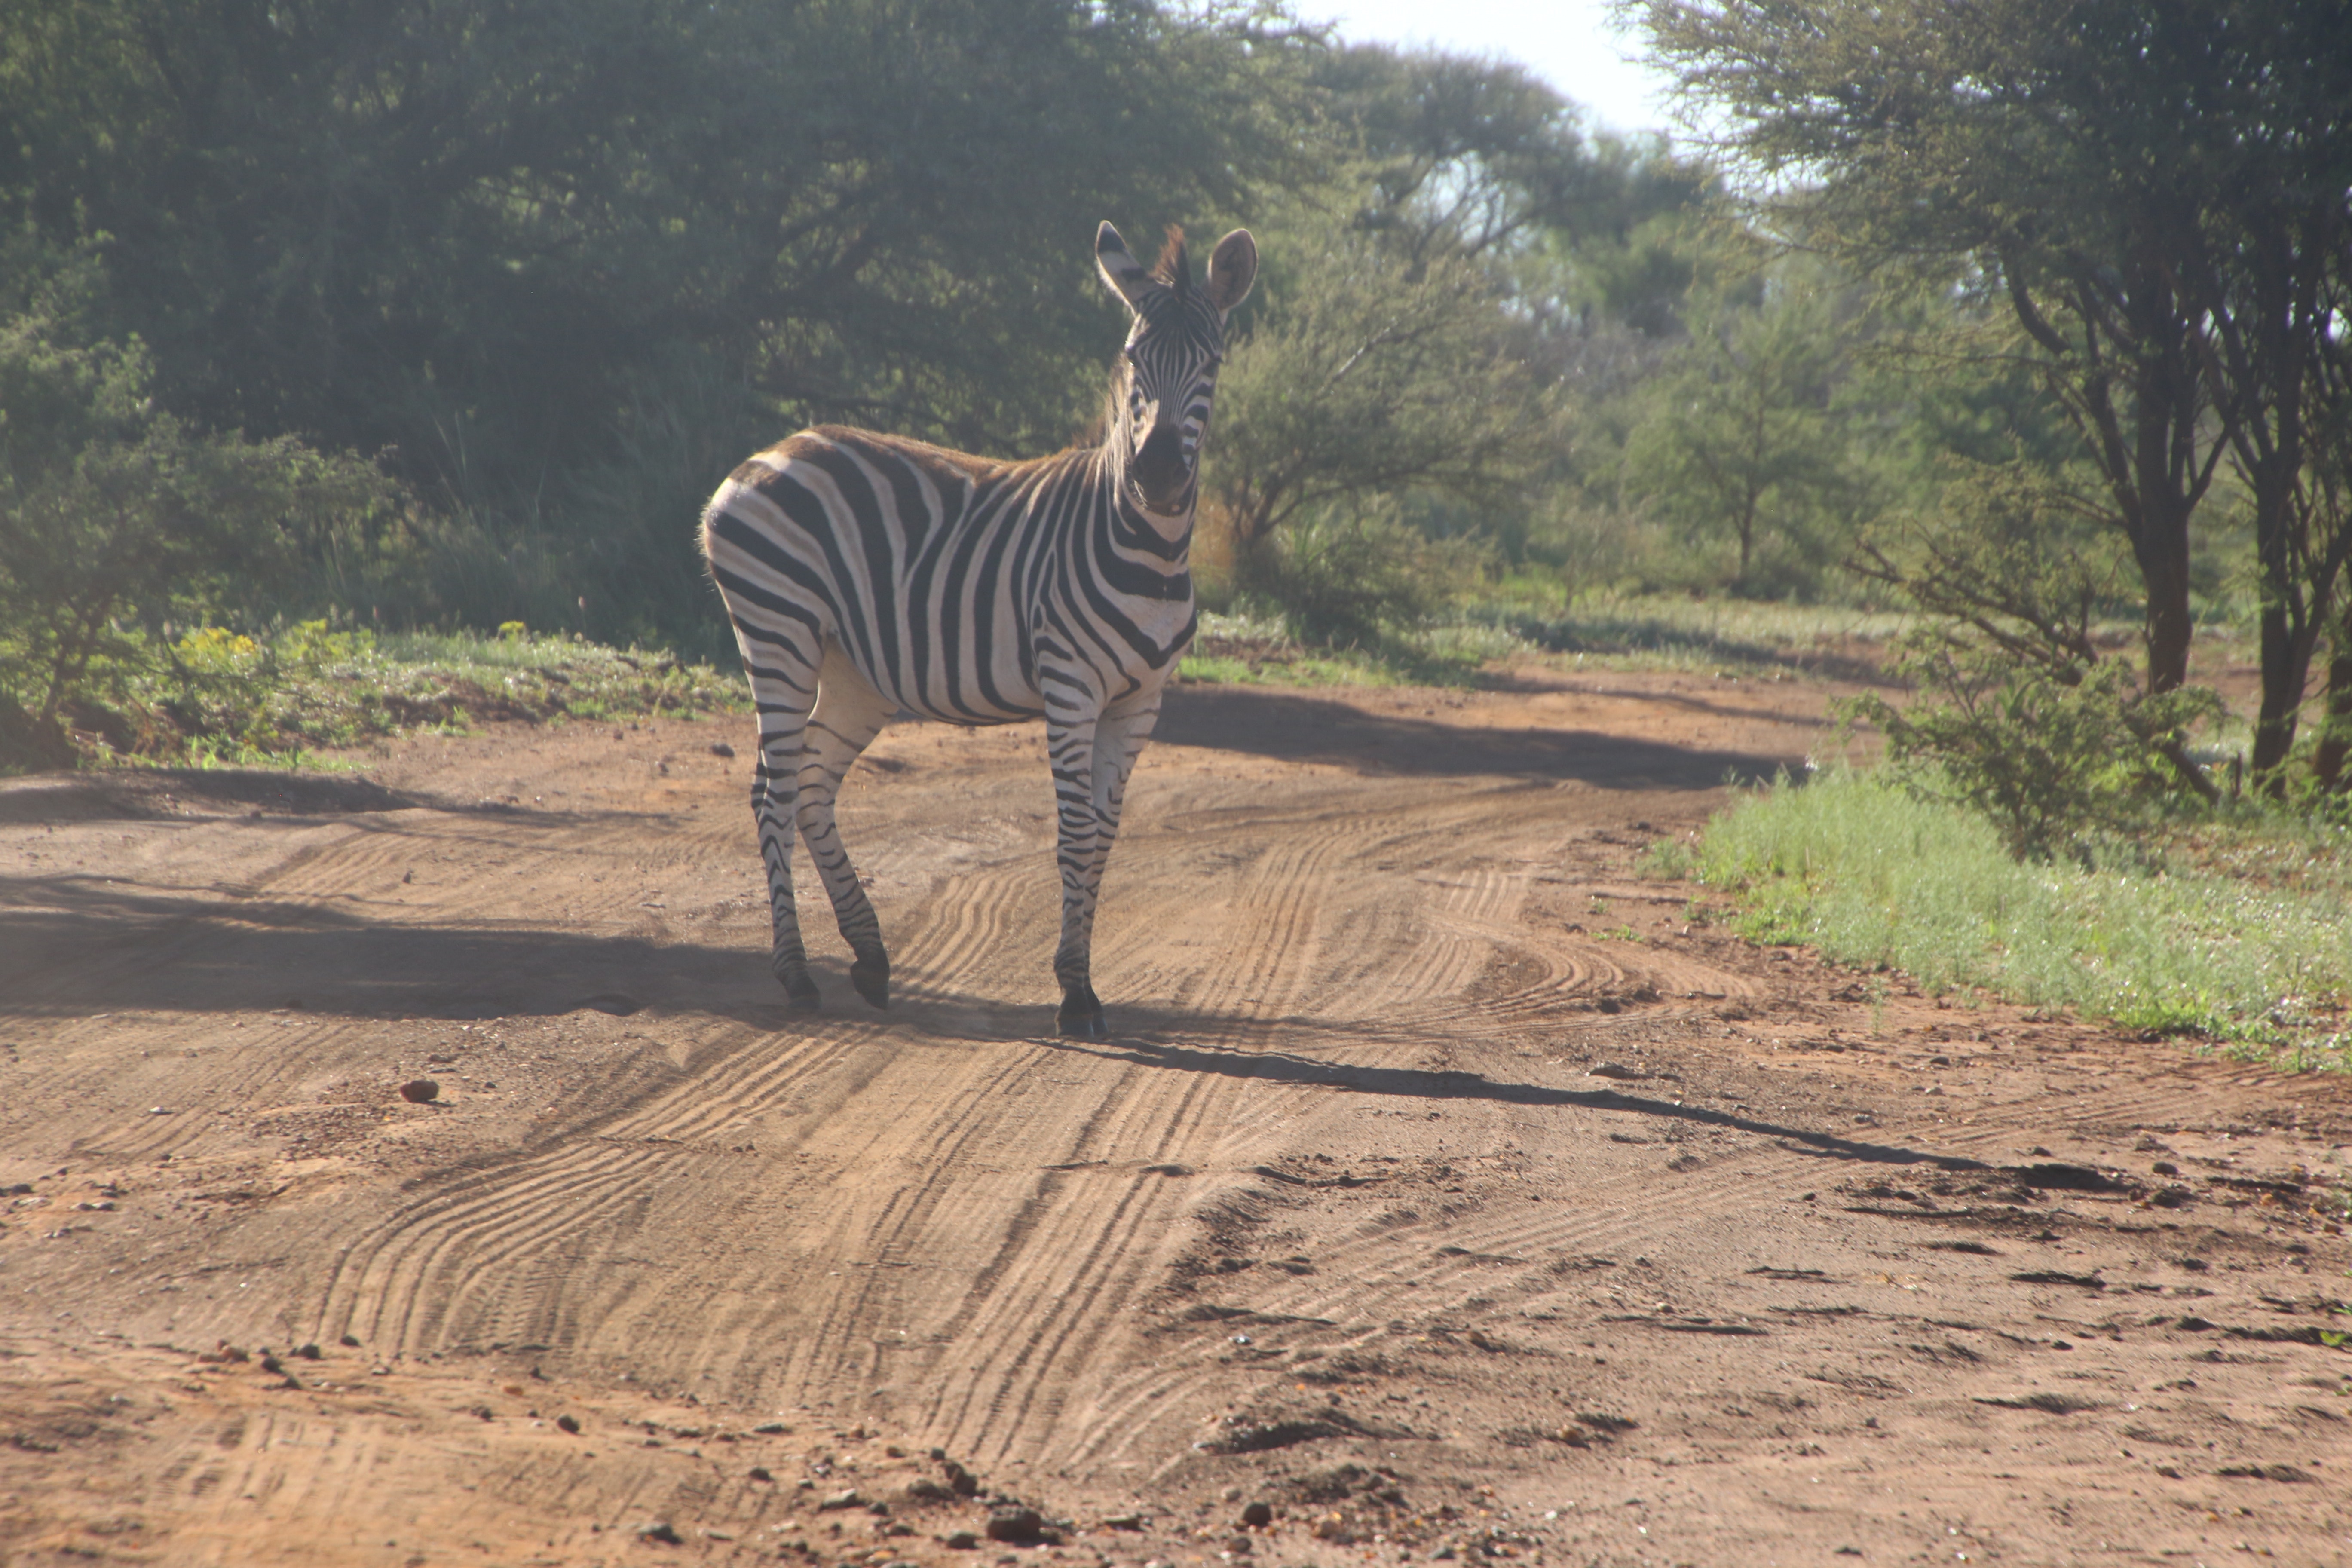 Photo of zebra on dirt road